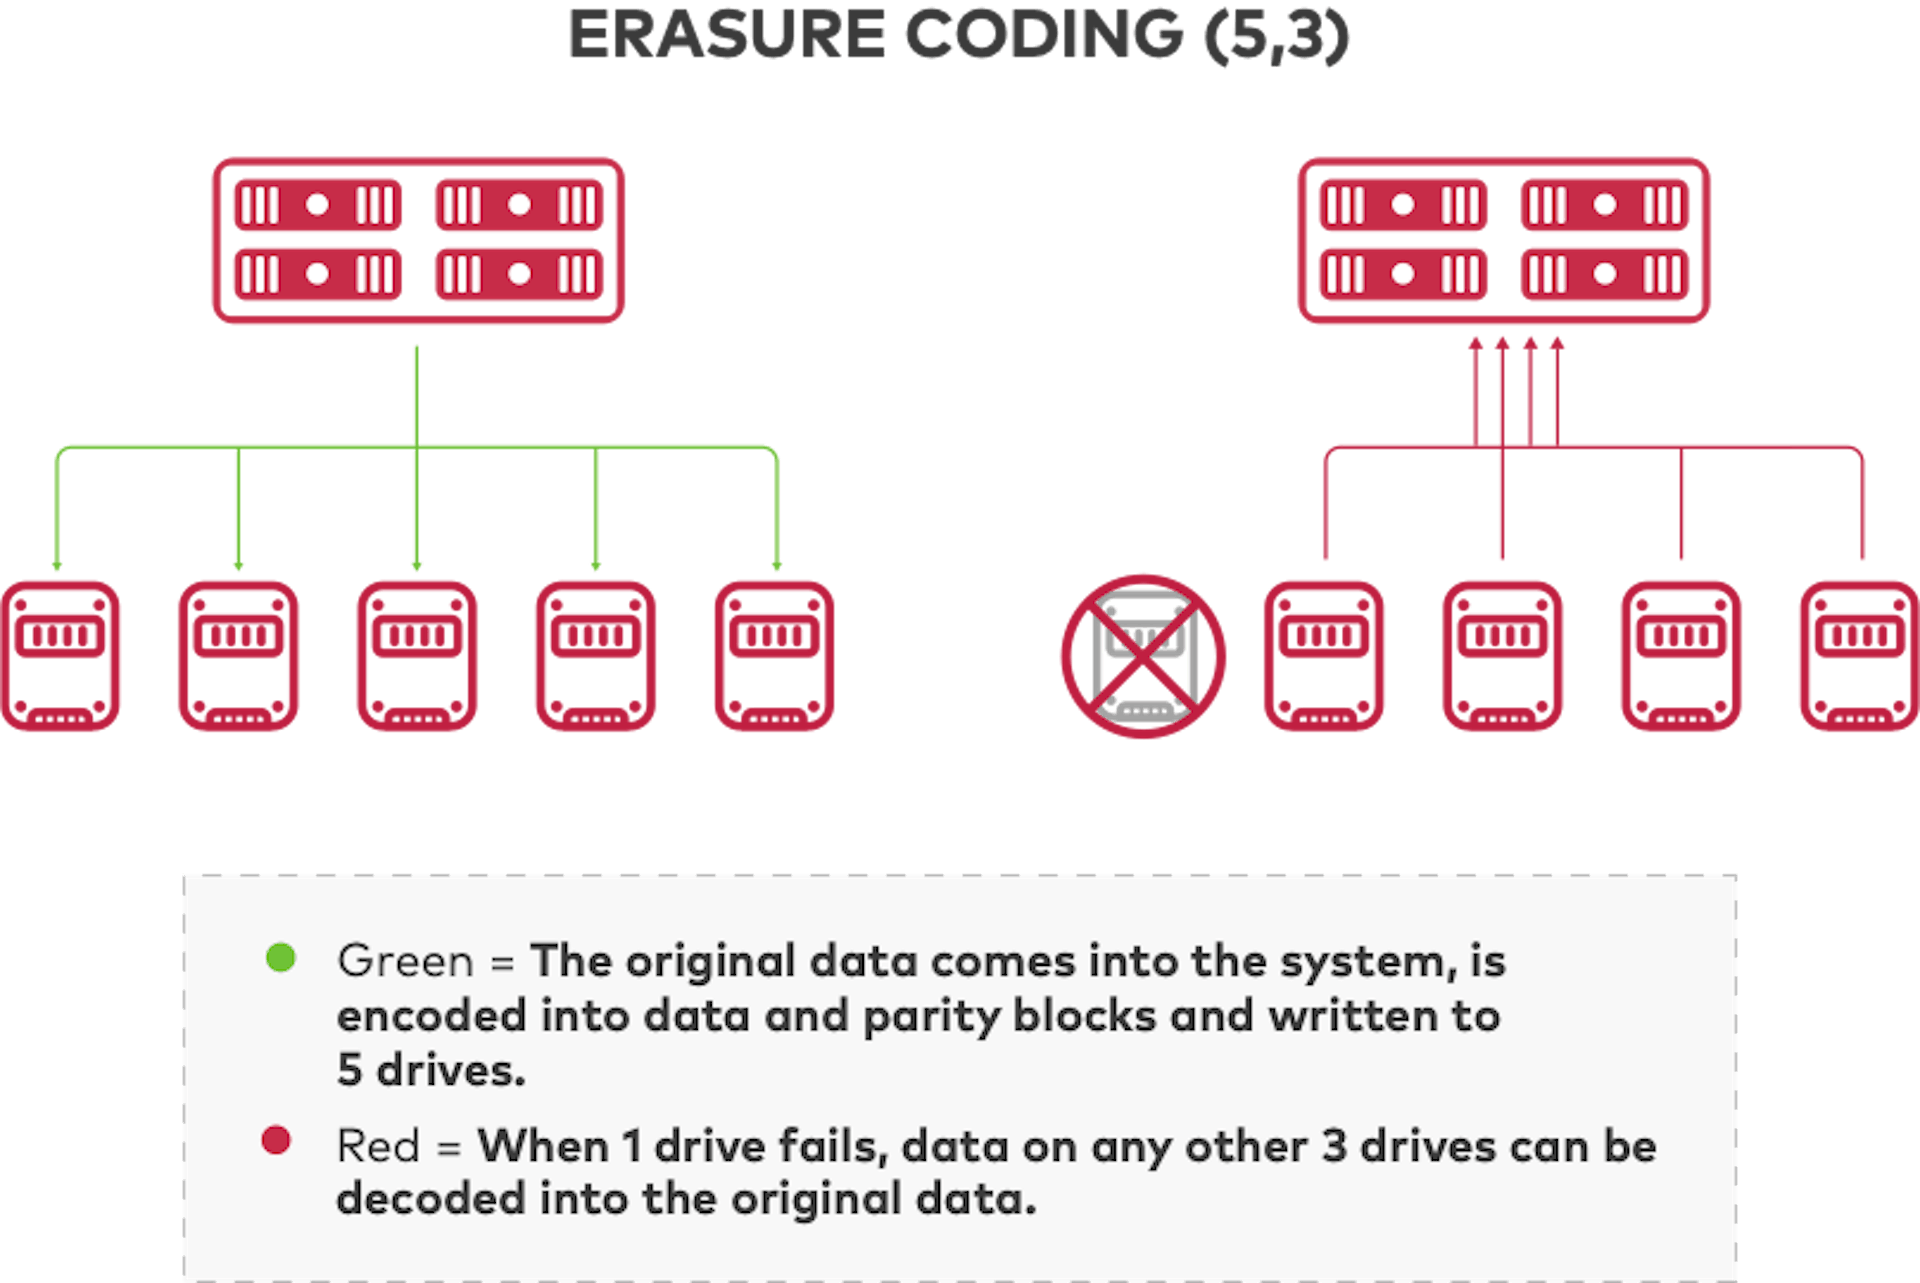 Erasure coding stripes data and parity across drives.